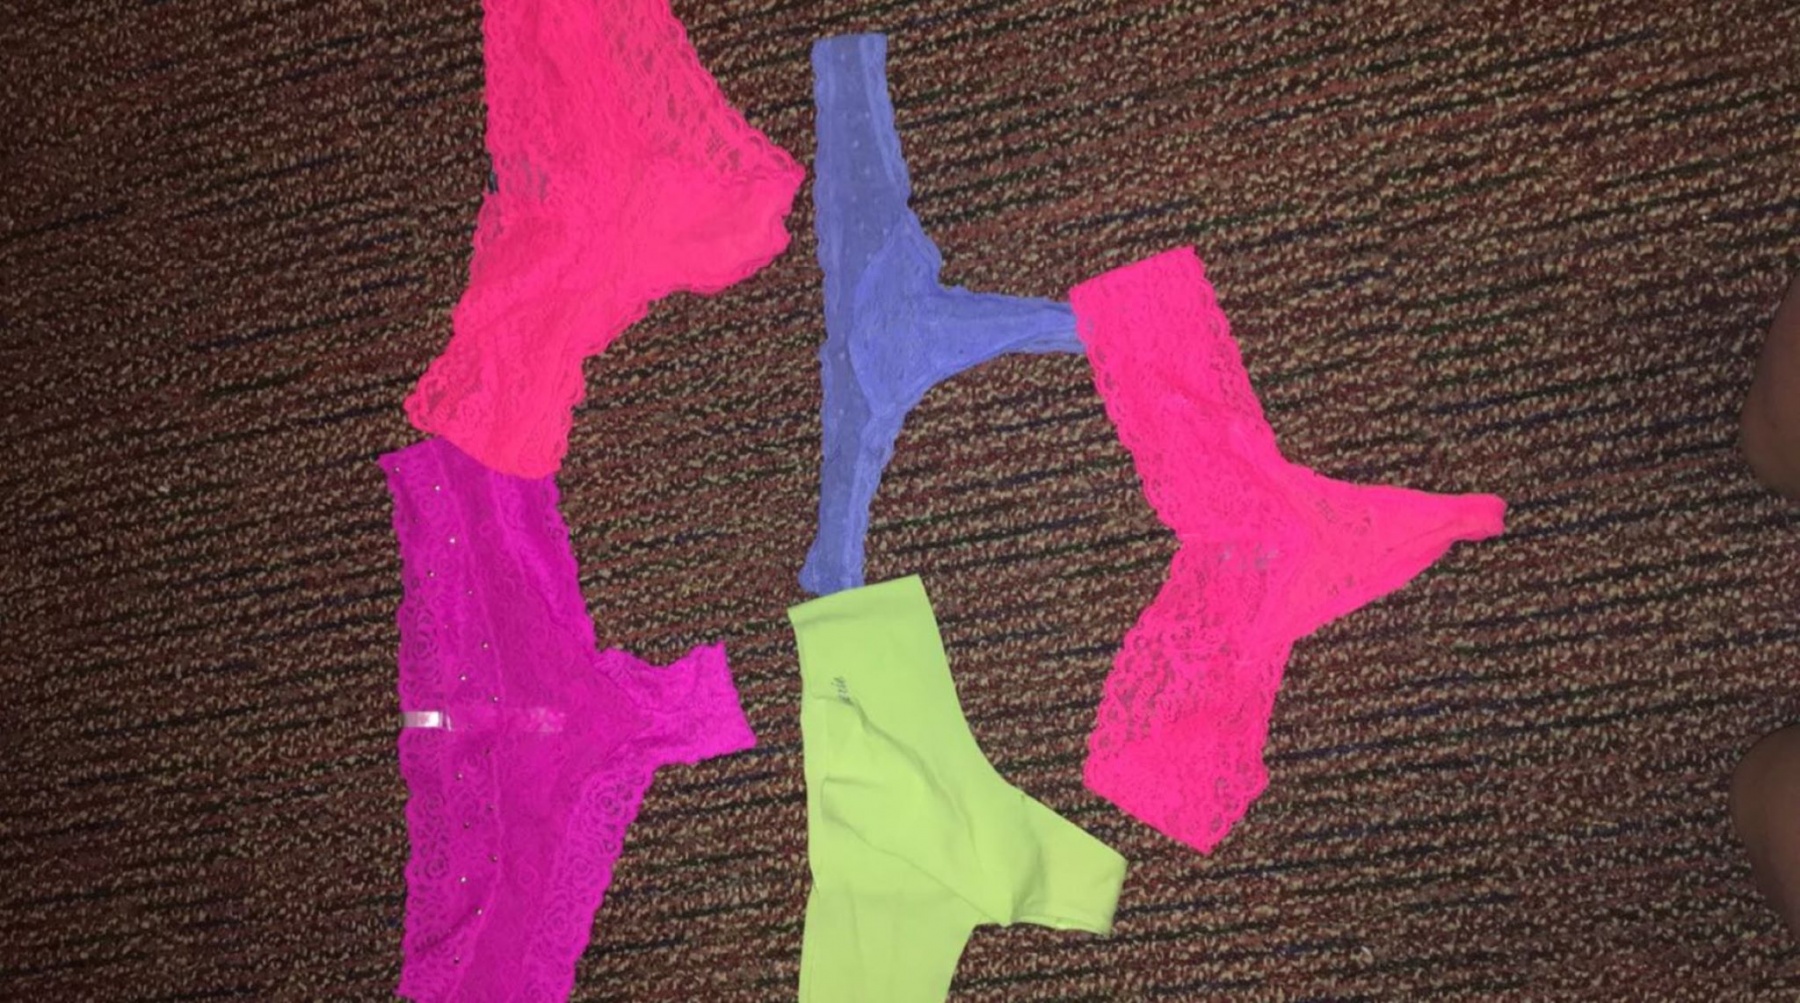 5 pairs of used panties